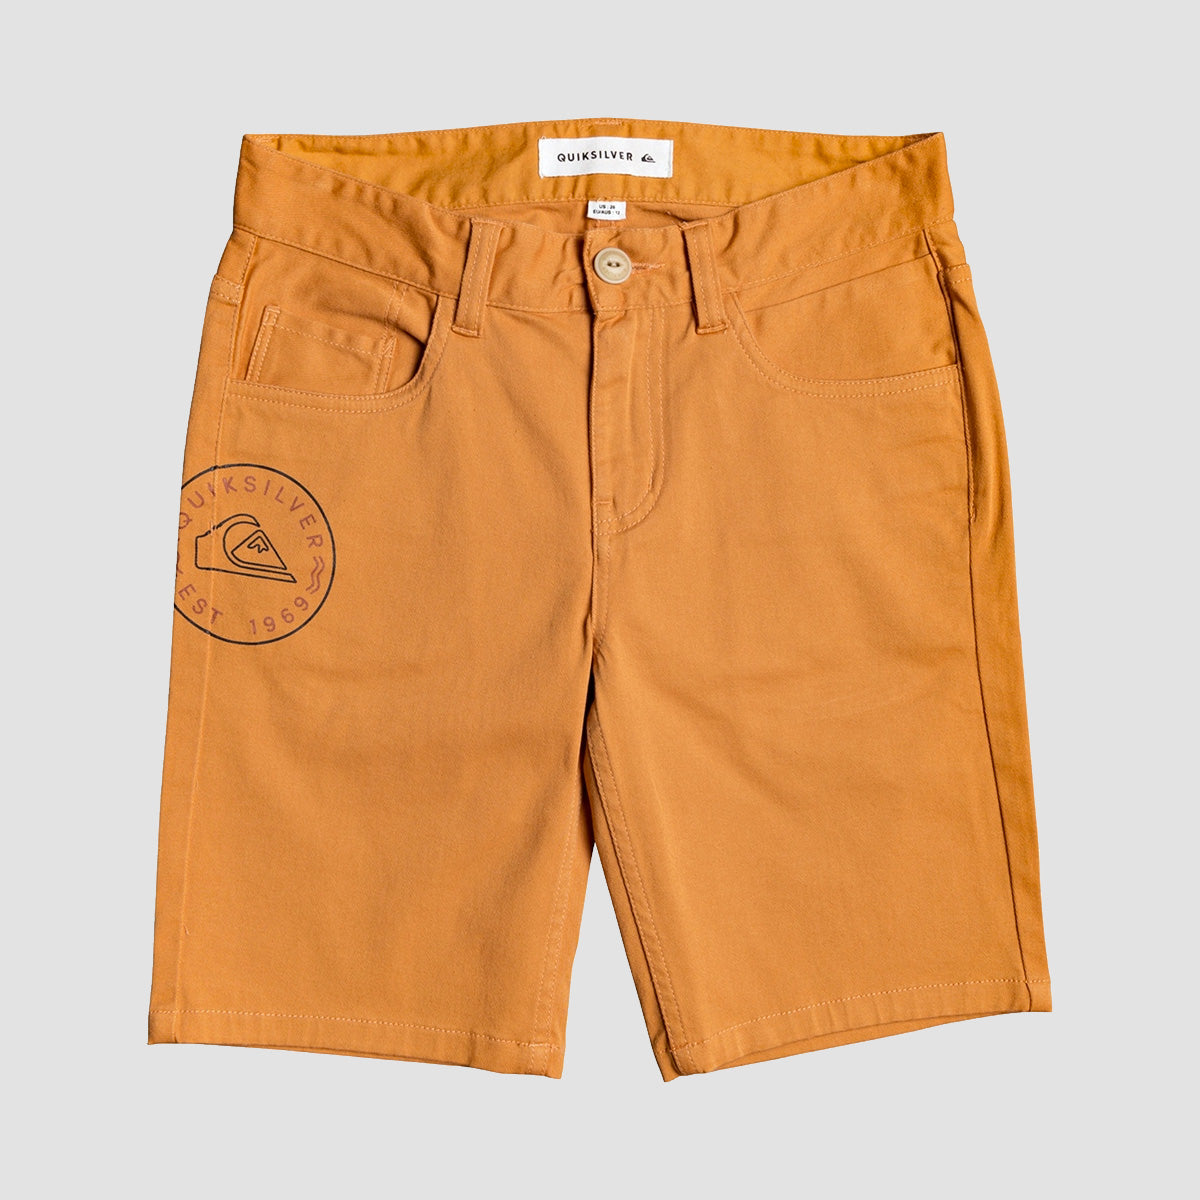 Quiksilver Pebbly Blu 17" Shorts Apricot Buff - Kids